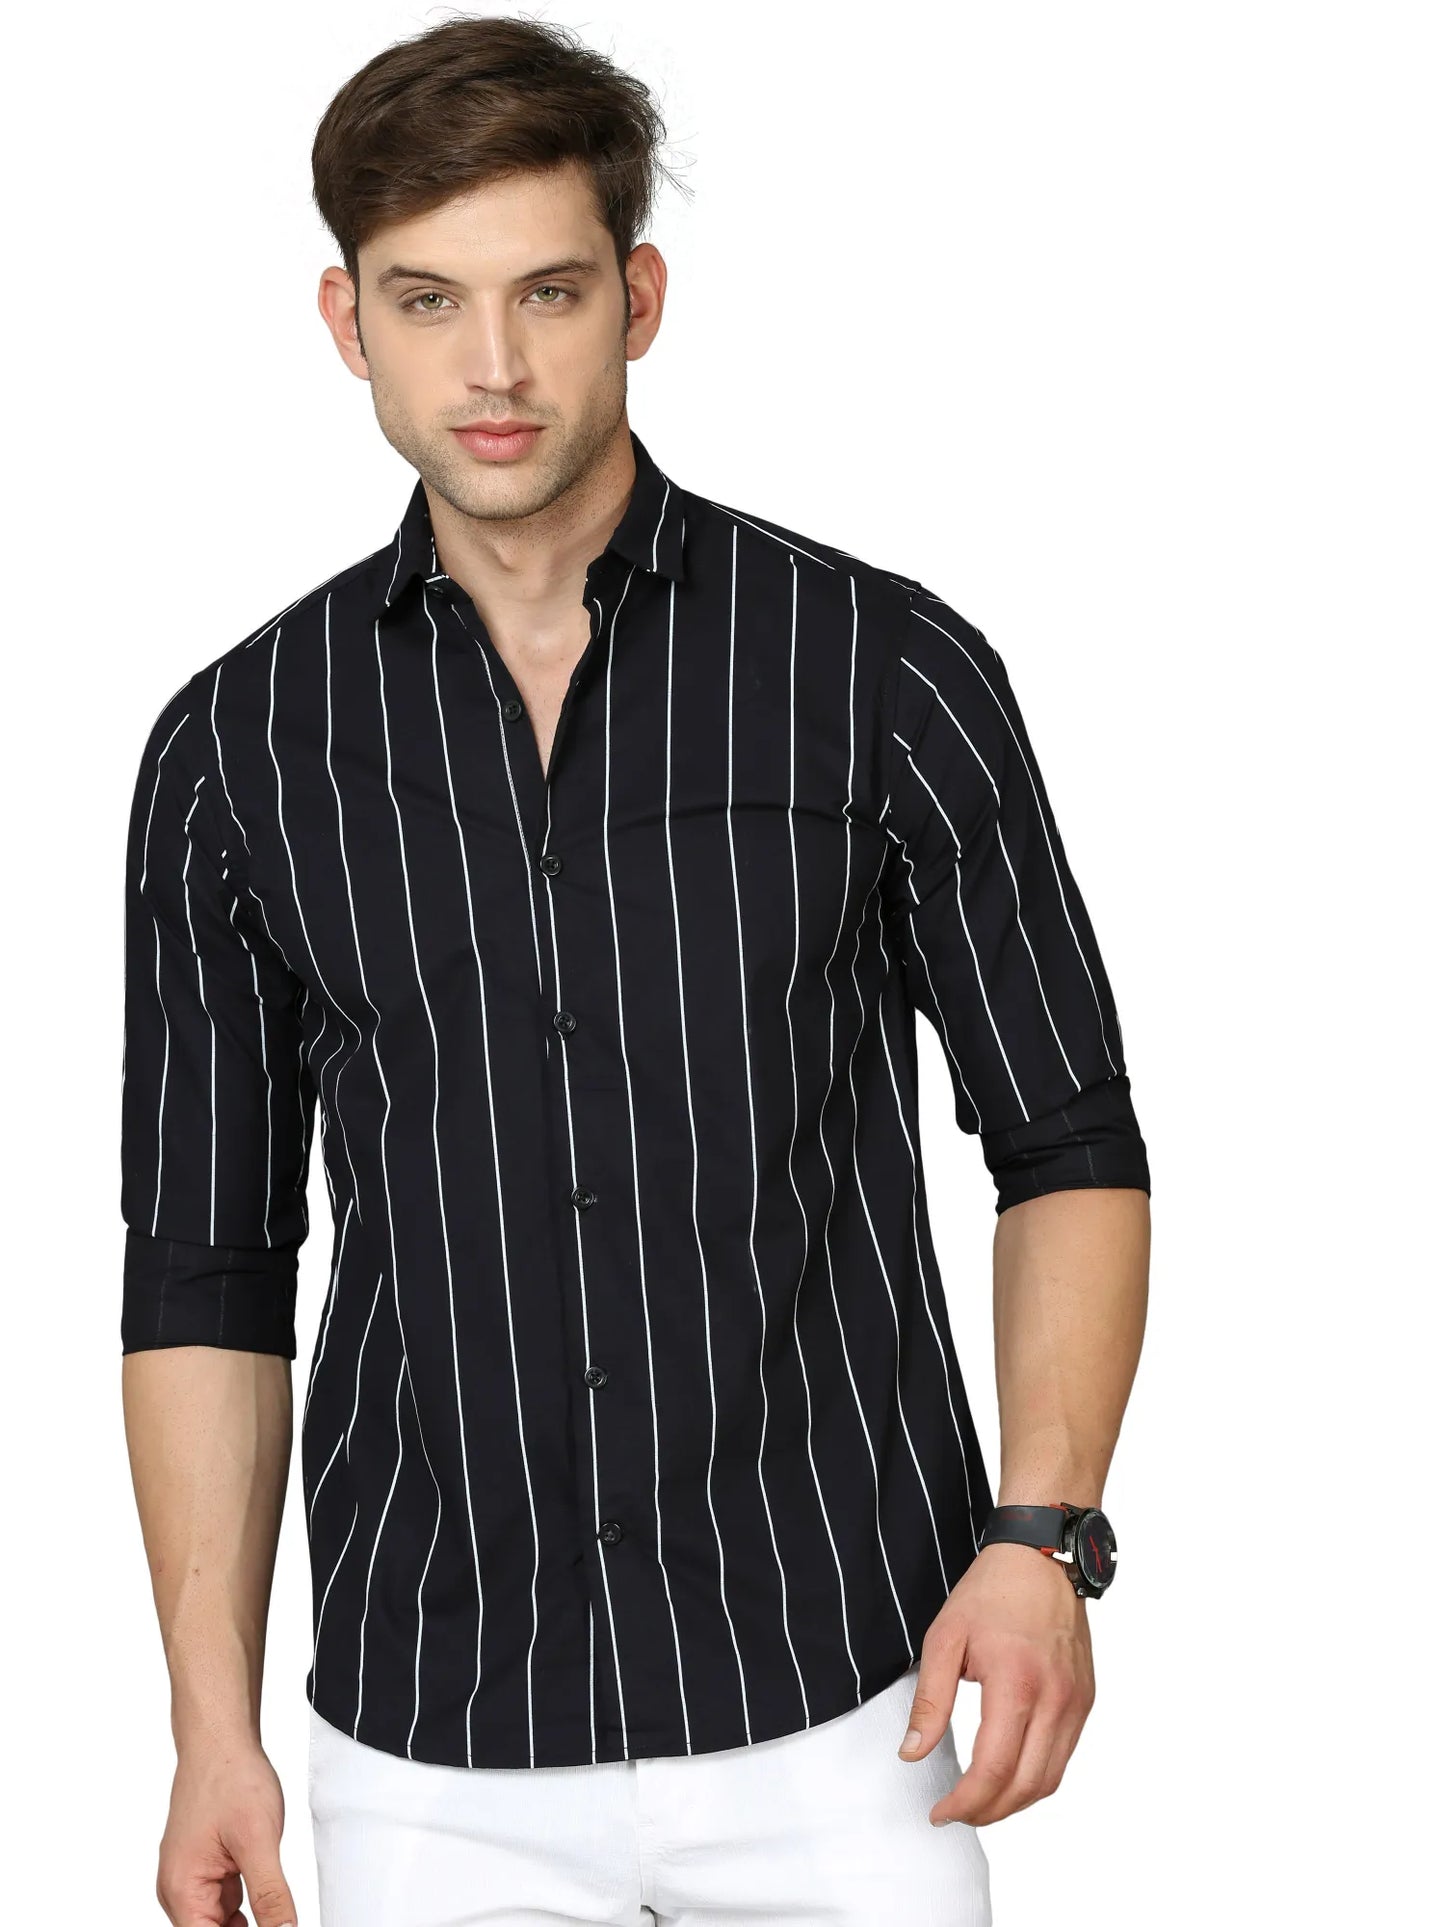 Fashion-forward Printed Stripes shirt for Men